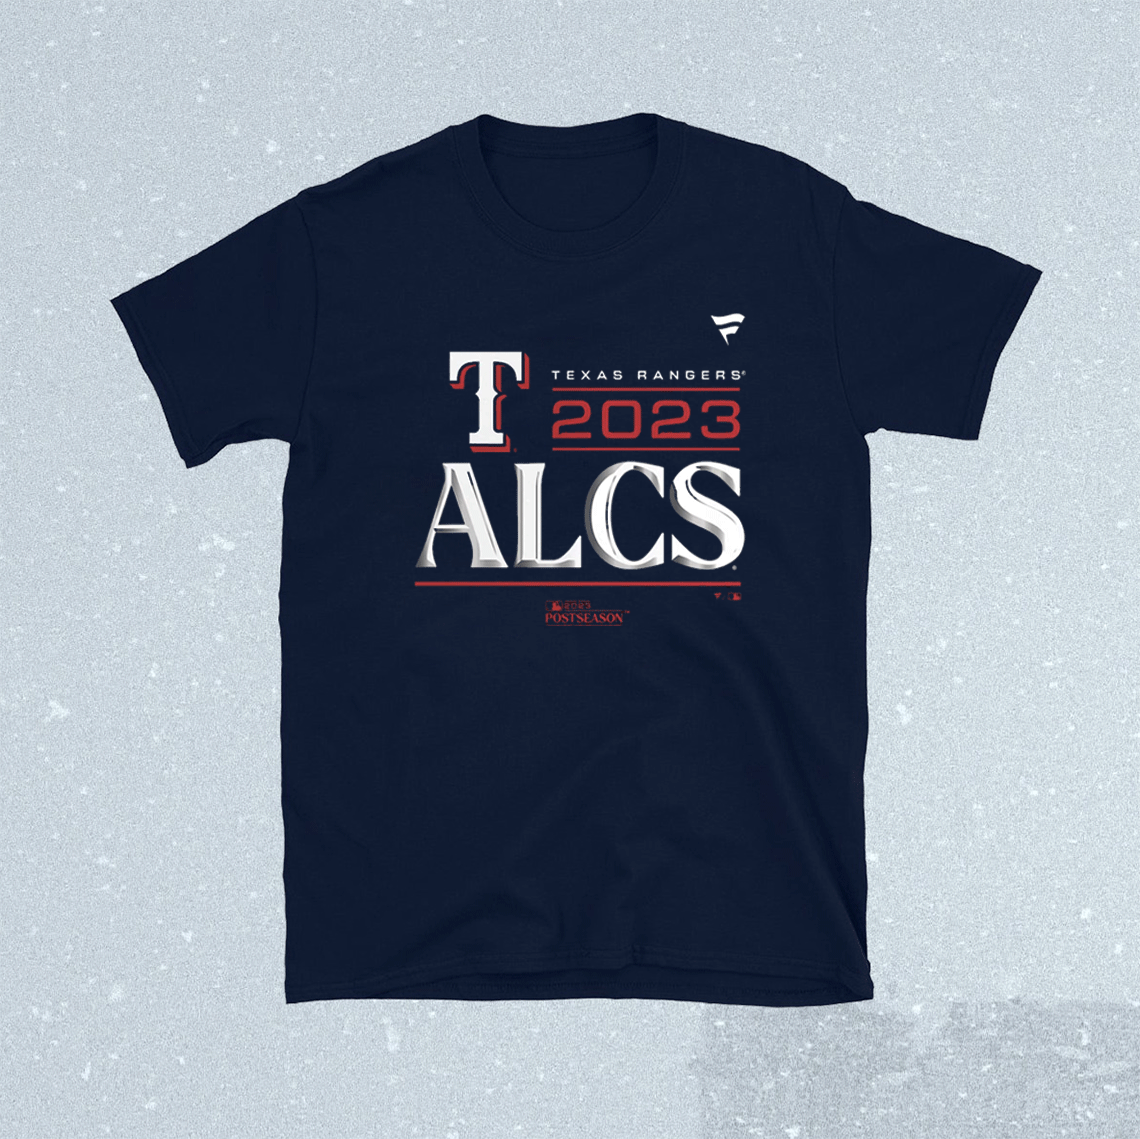 Texas Rangers Alcs 2023 T-Shirt - ReviewsTees